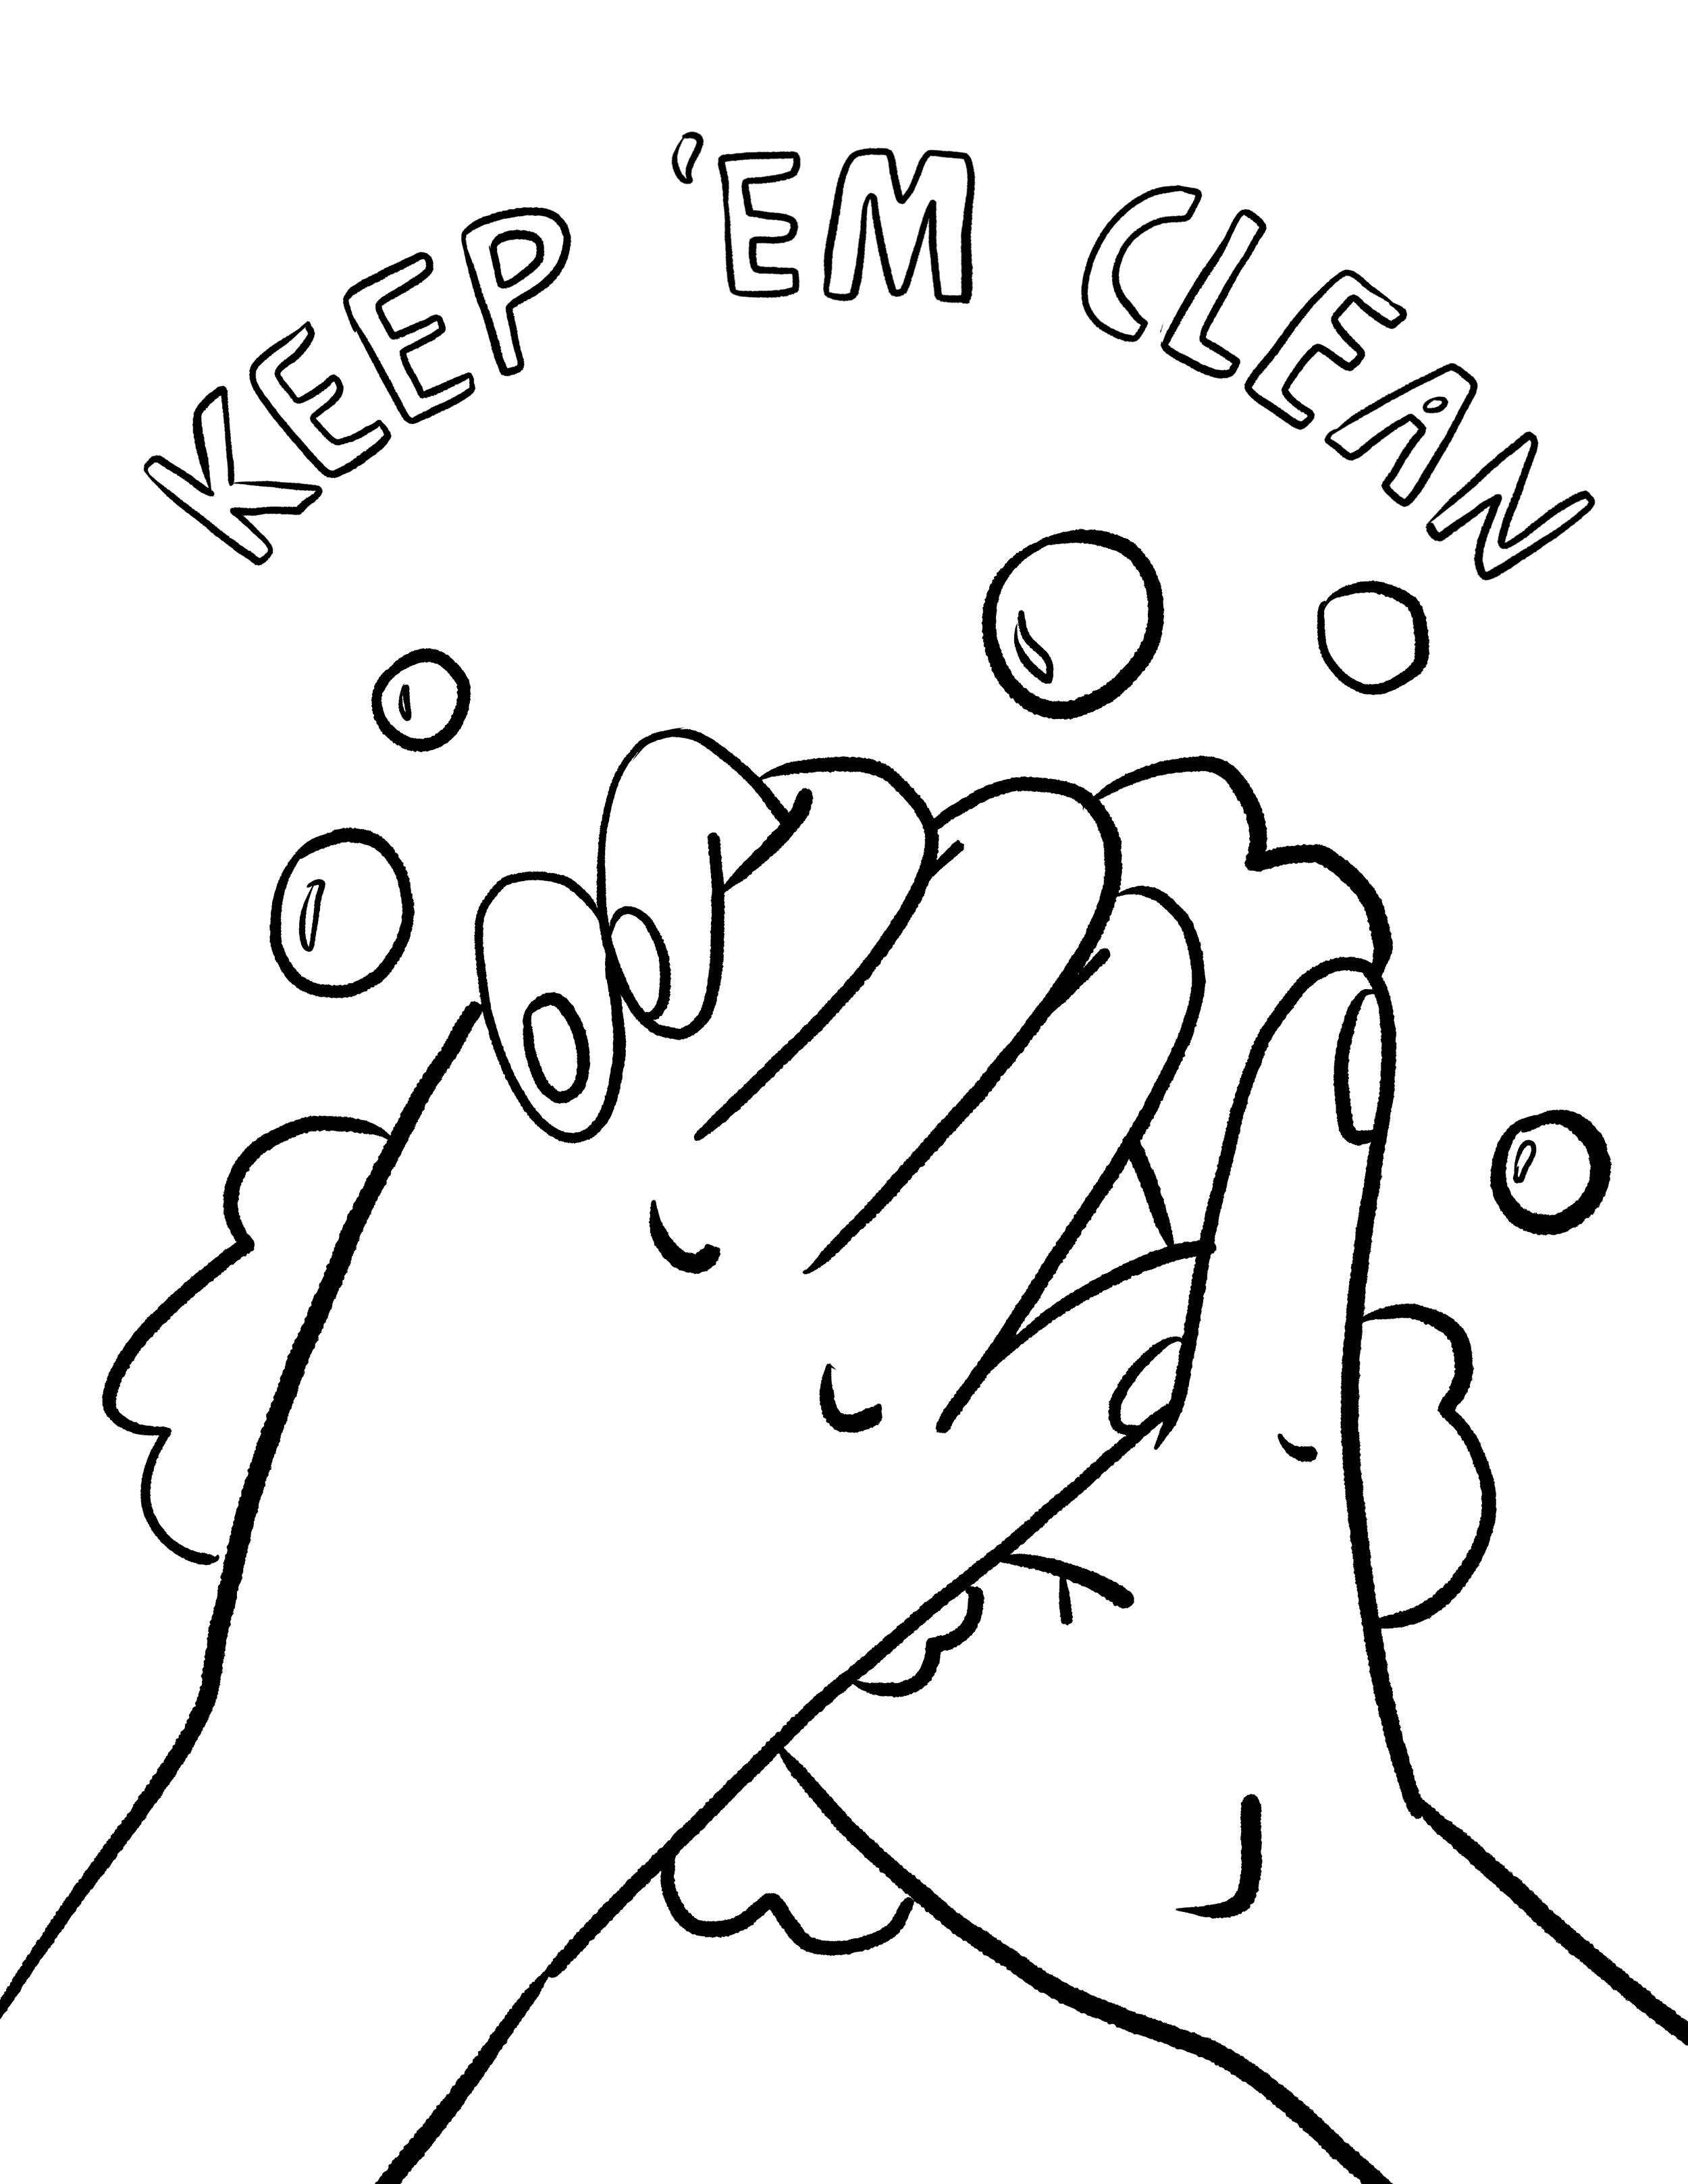 Banana_Bread_0011_keep-em-clean.png